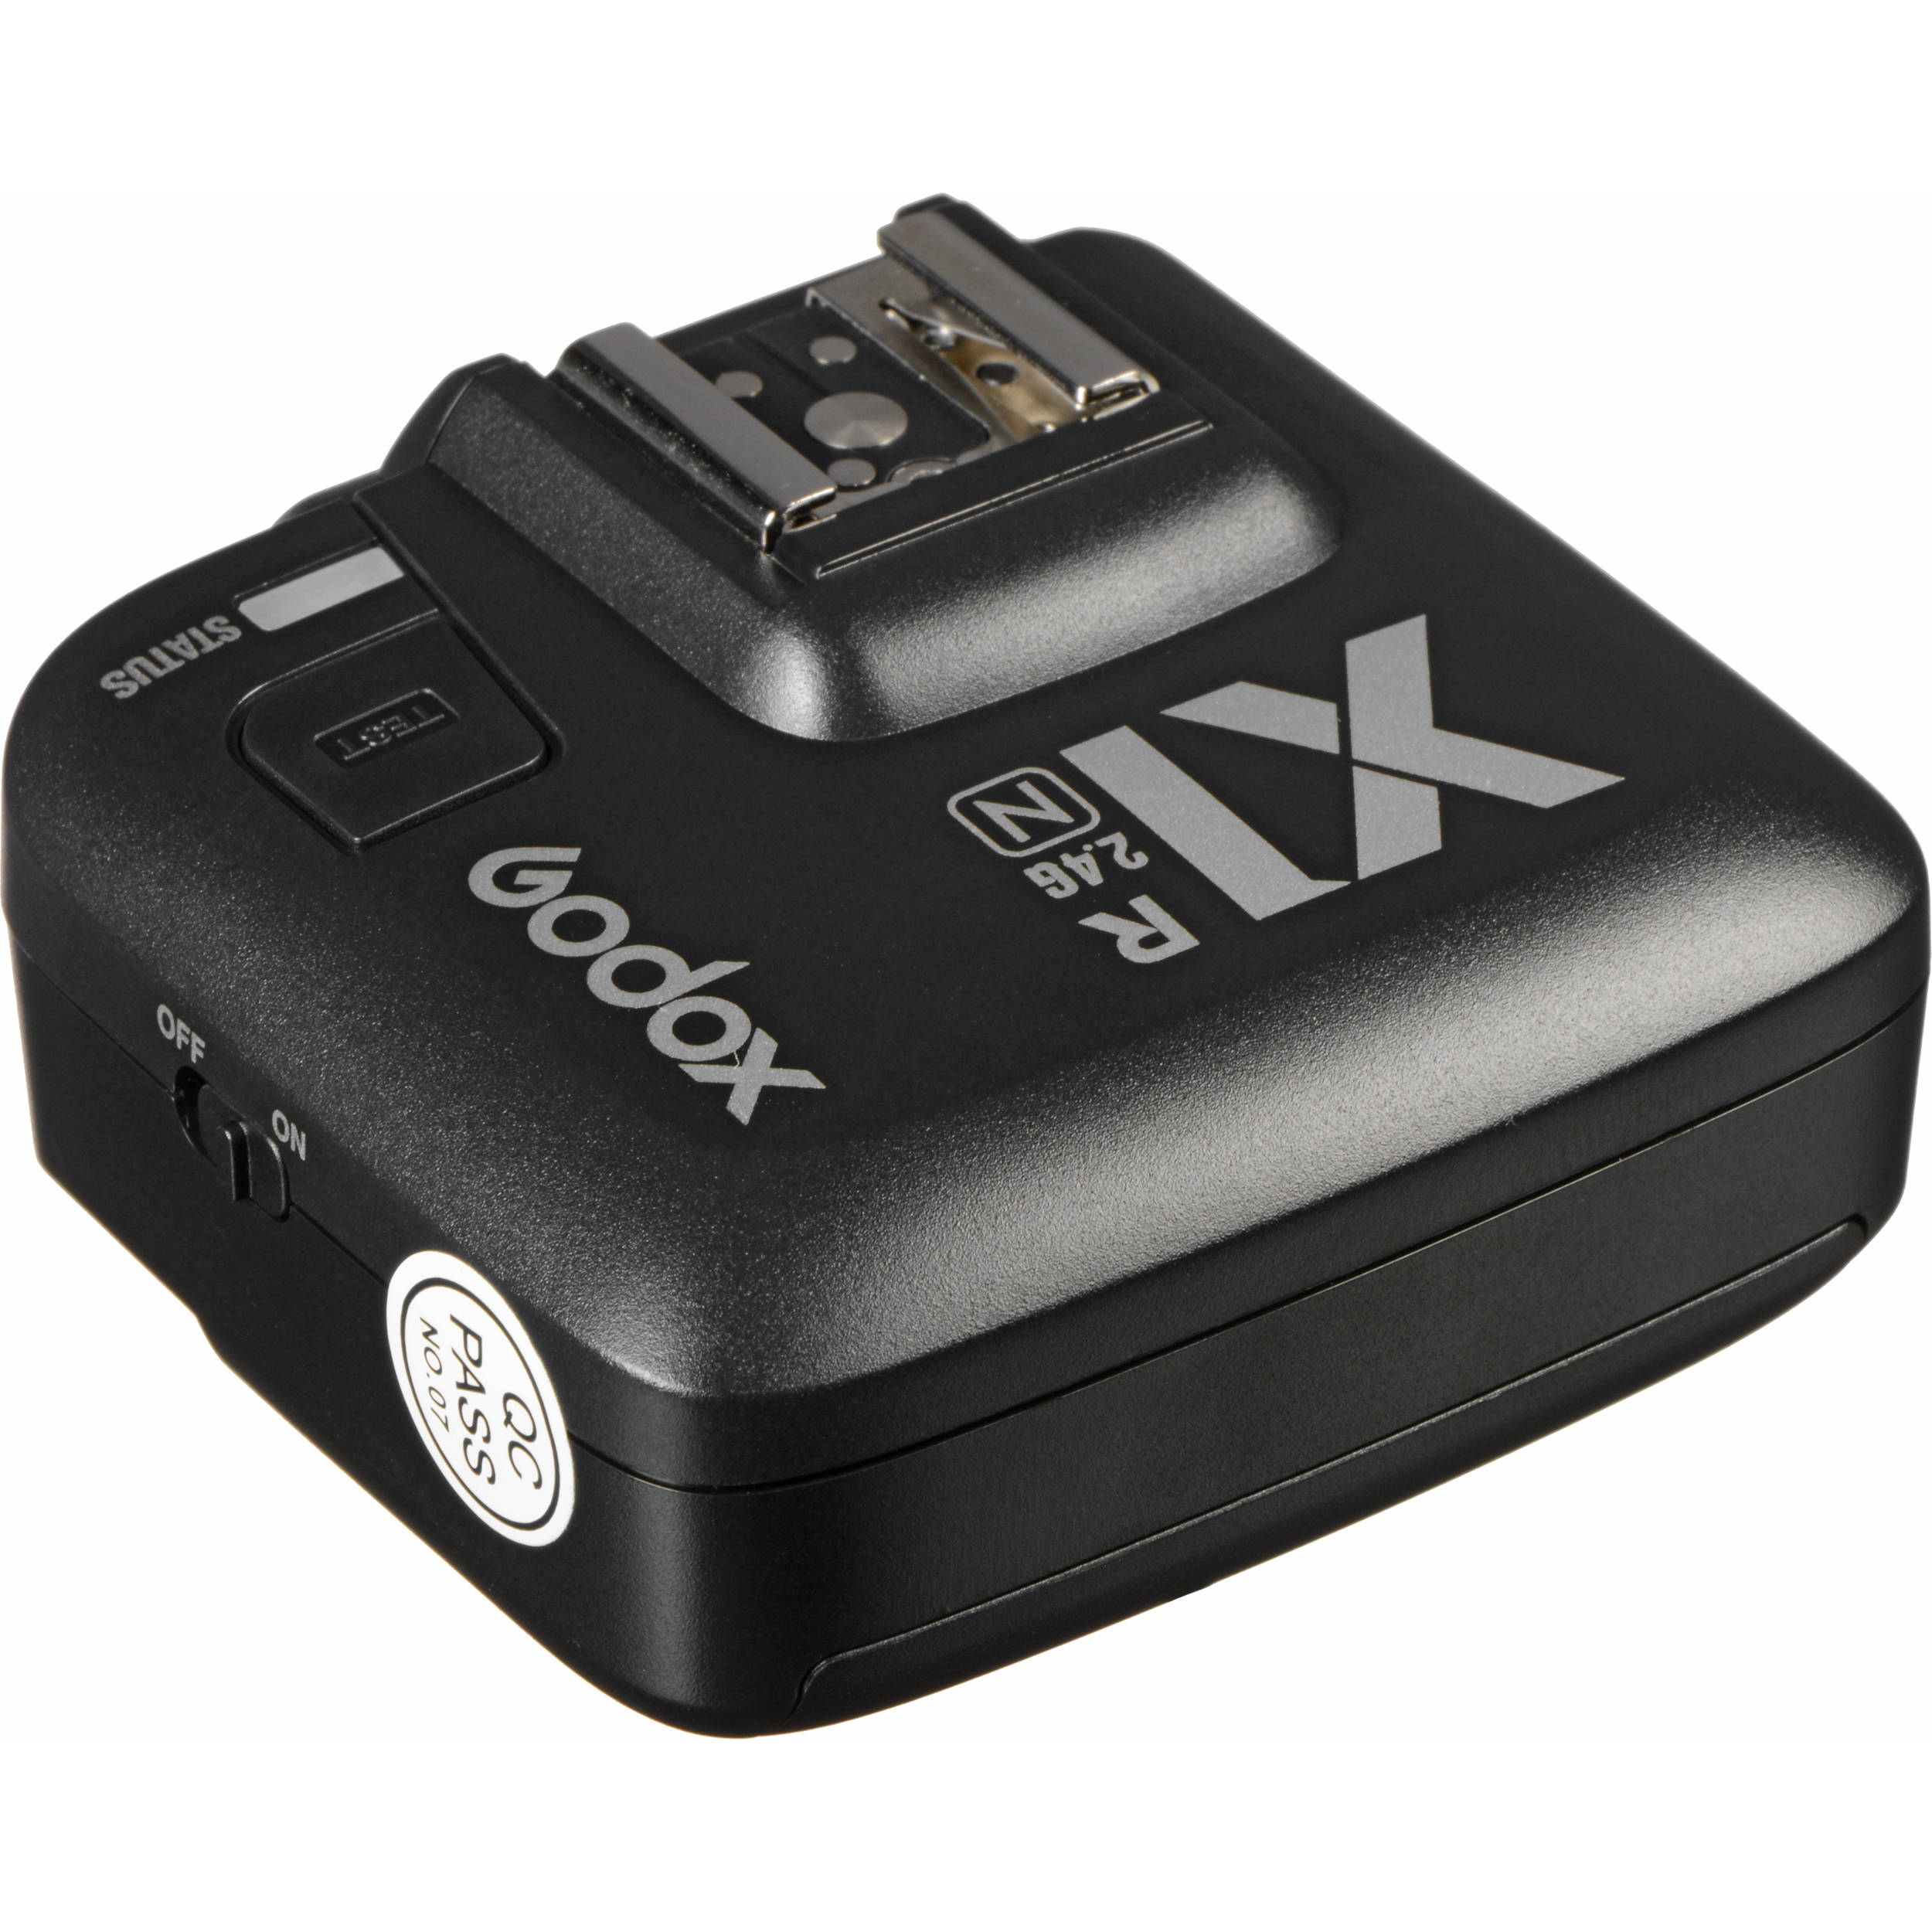 Godox X1-N TTL Wireless Flash Trigger Set for Nikon